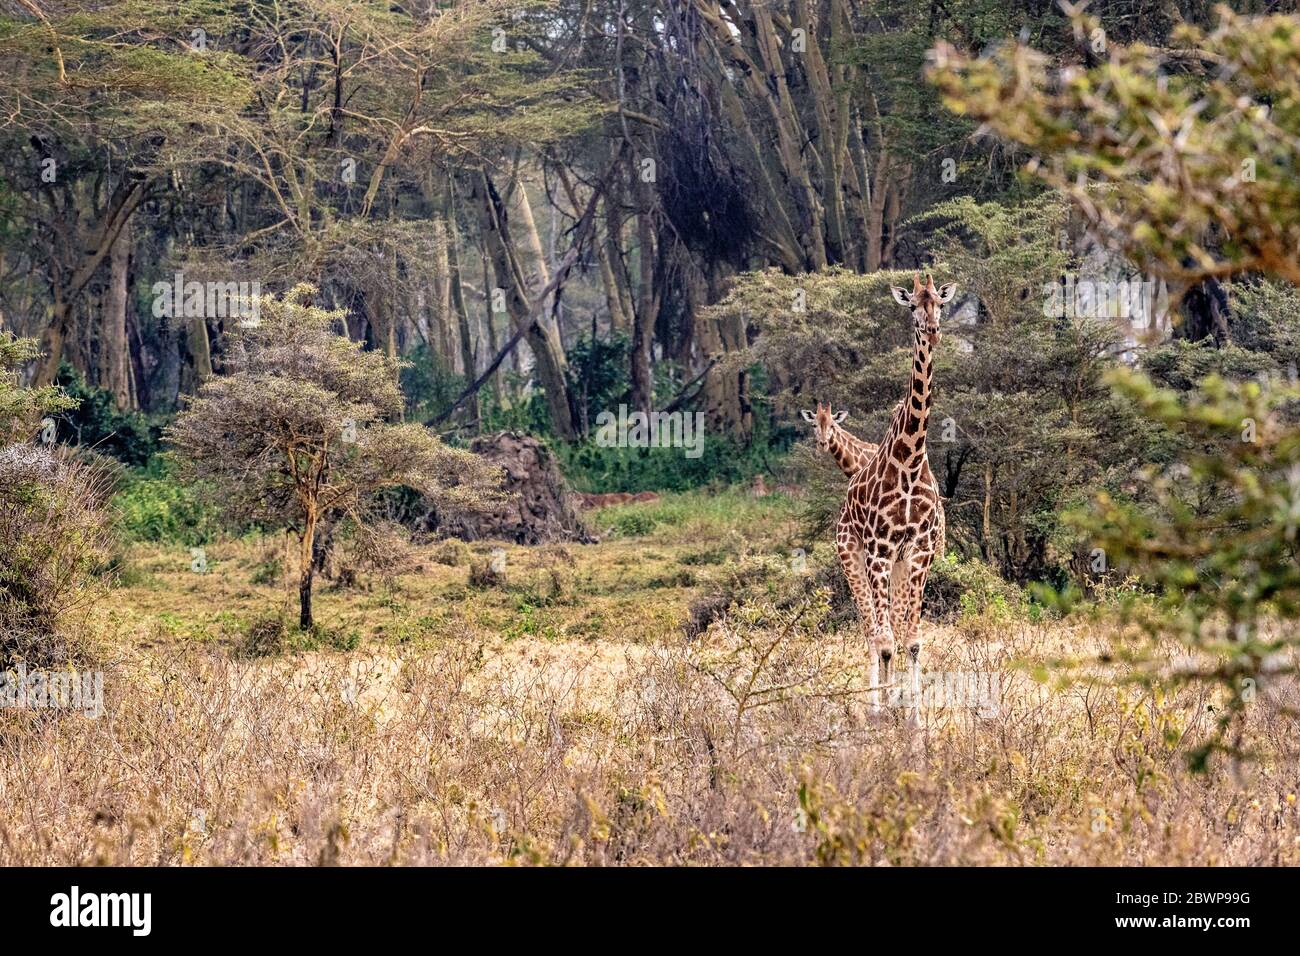 Endangered Rothschild's giraffe walking  in Lake Nakuru, Kenya Africa Stock Photo